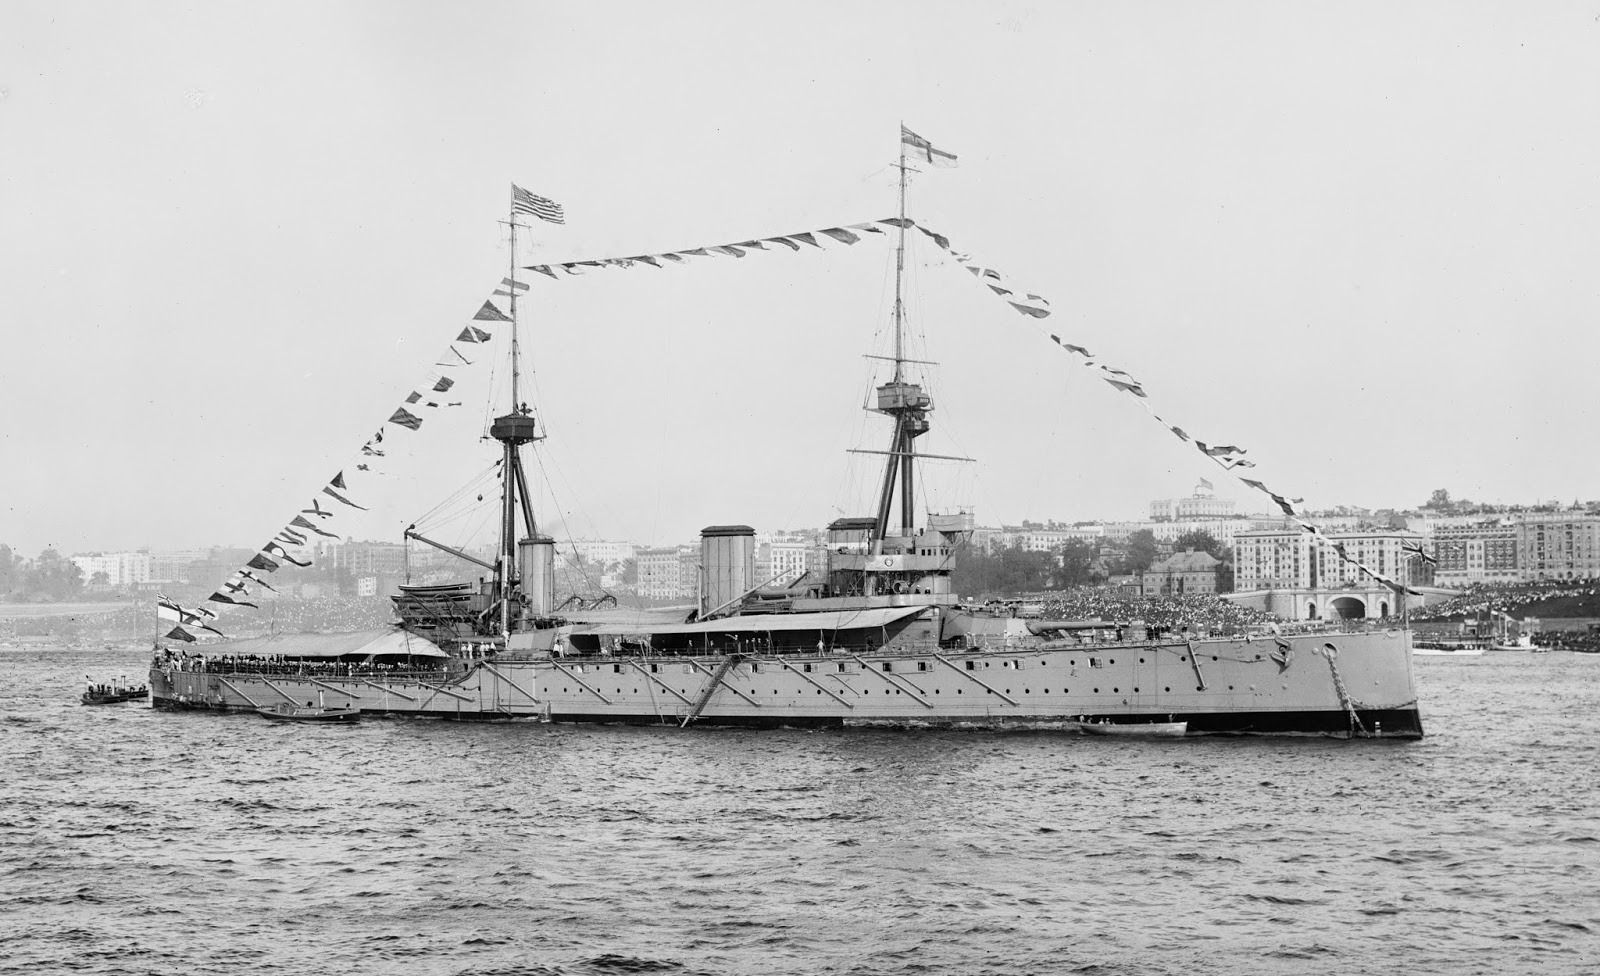 HMS Inflexible